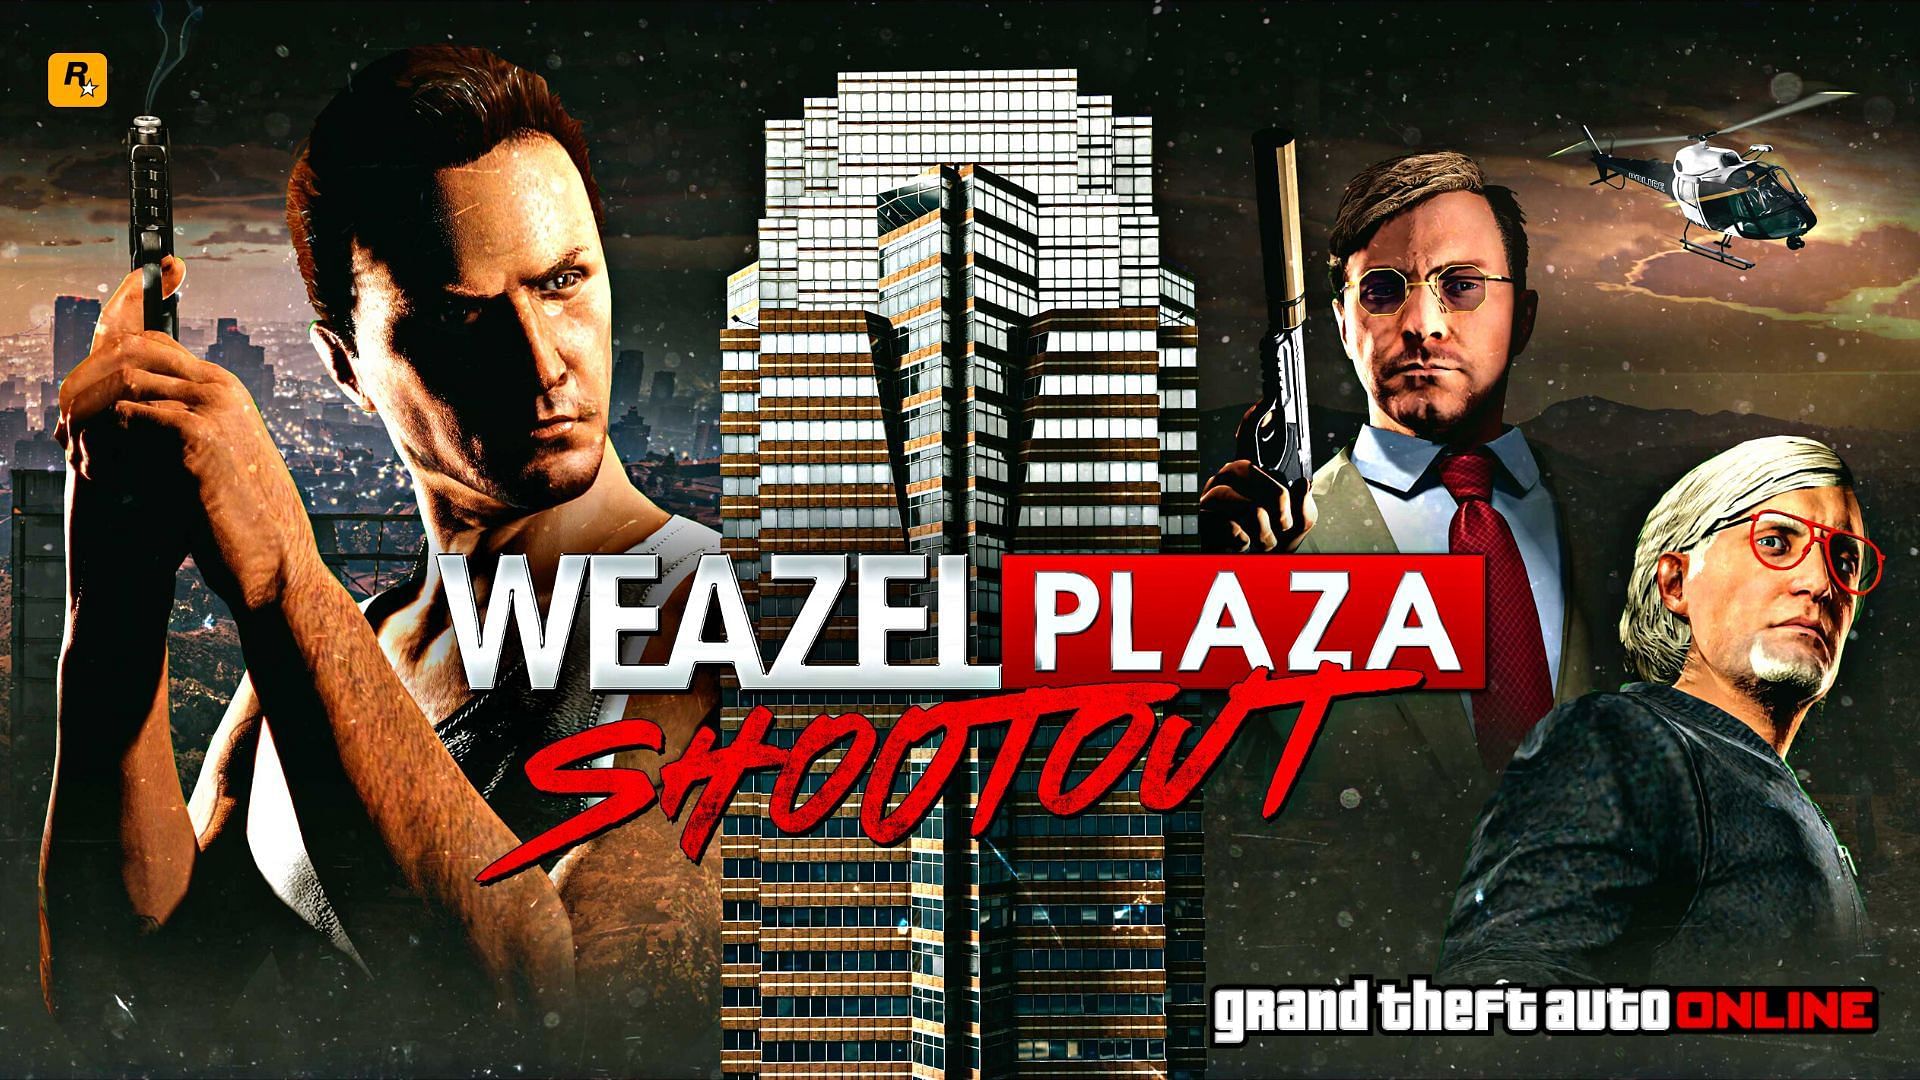 A brief about possible future of Weazel Plaza Shootout random event of GTA Online (Image via Rockstar Games)